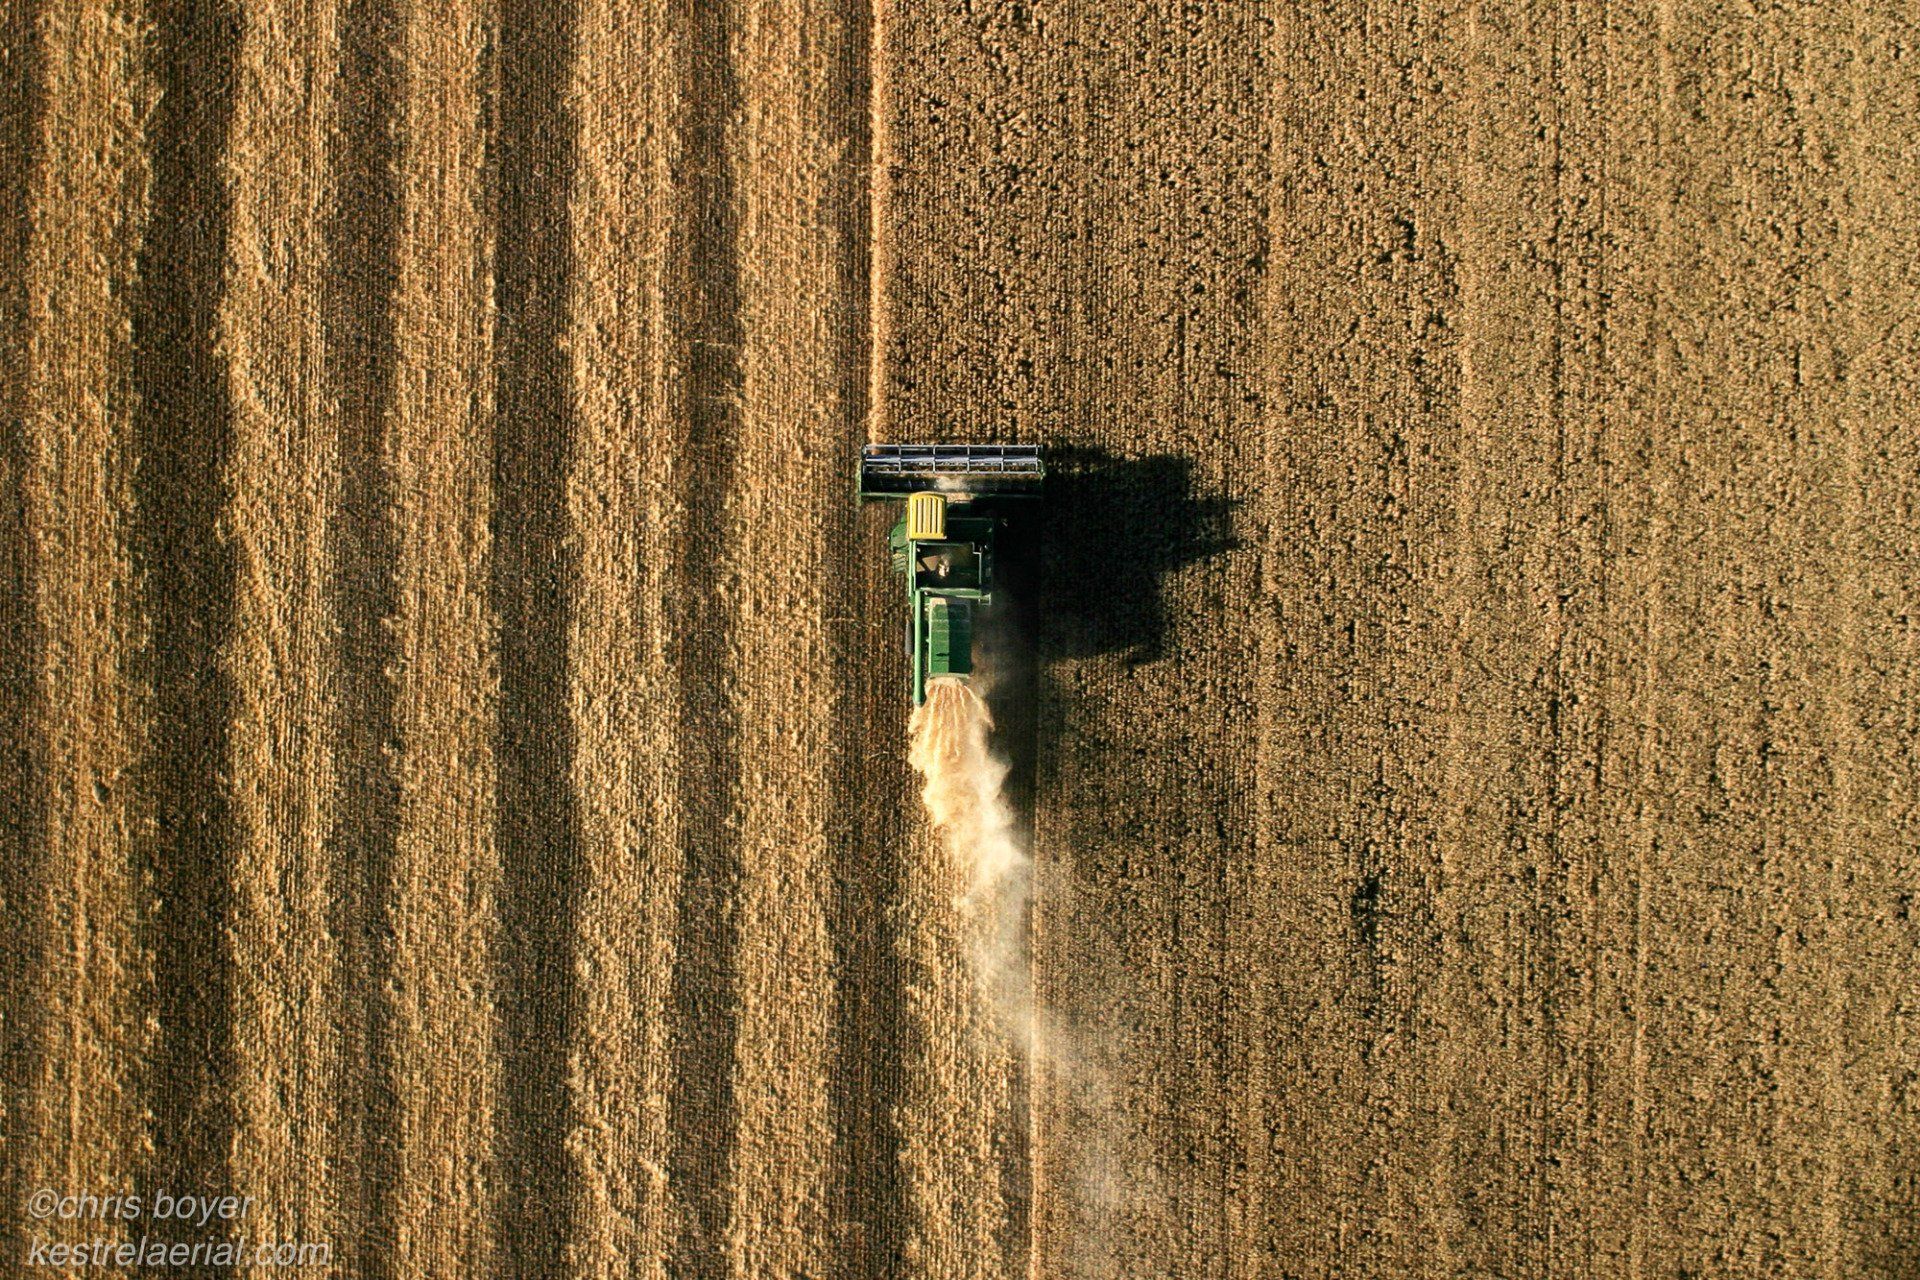 Central Montana Grain Harvest